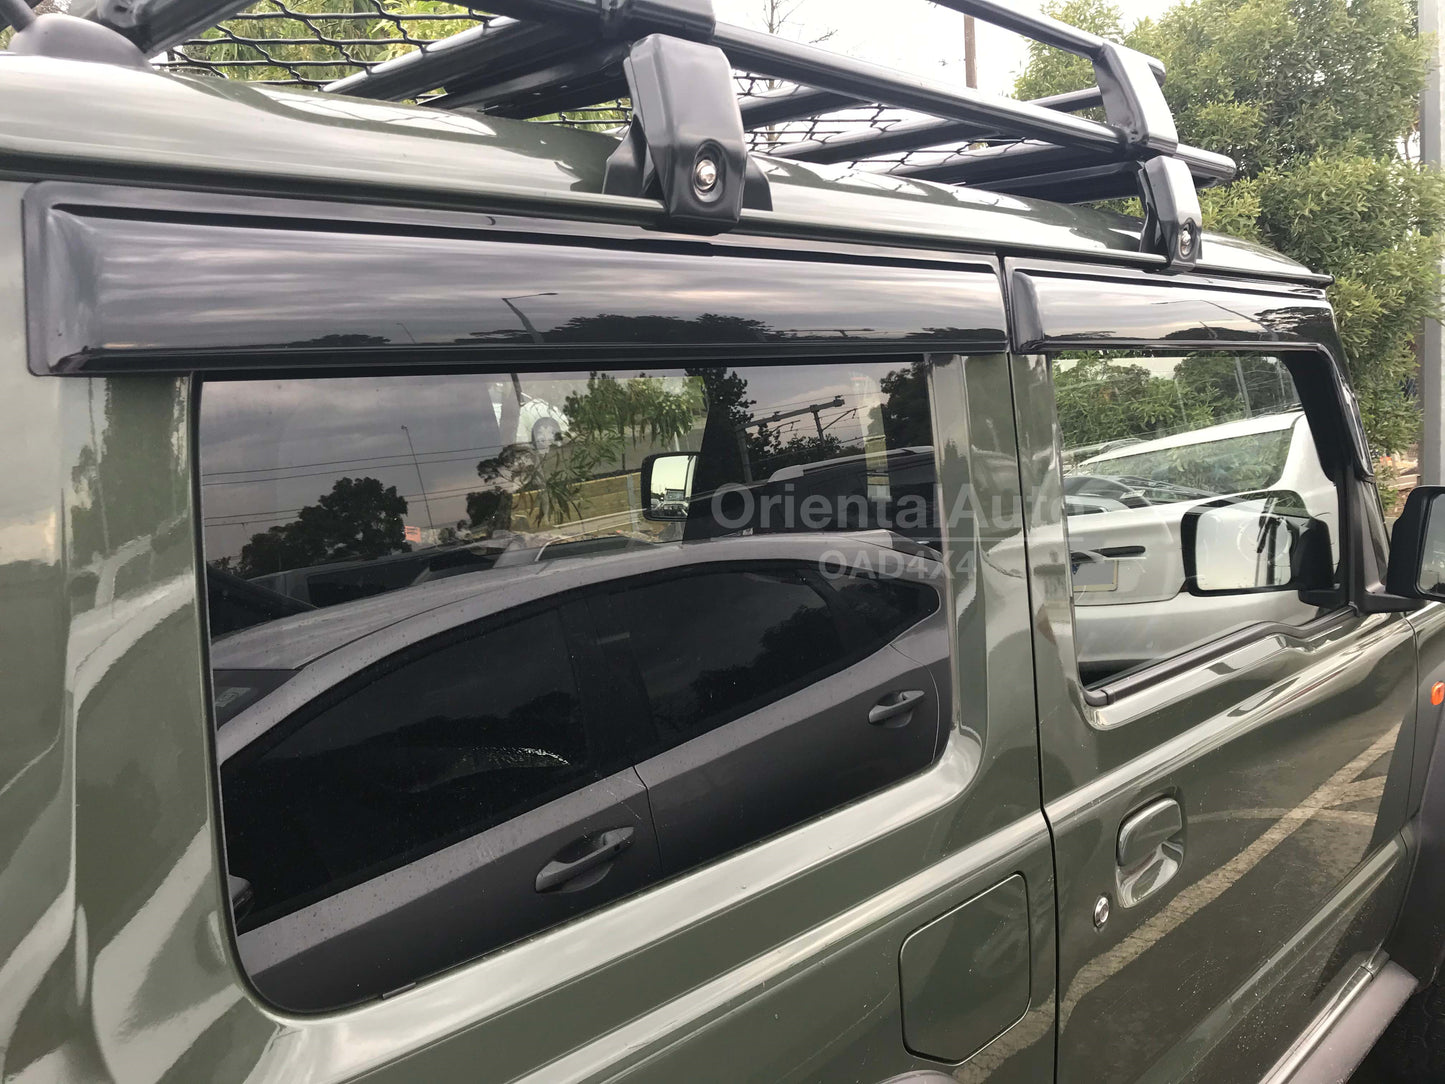 Luxury Weather Shields for Suzuki Jimny 3 Doors 2018+ Weathershields Window Visors